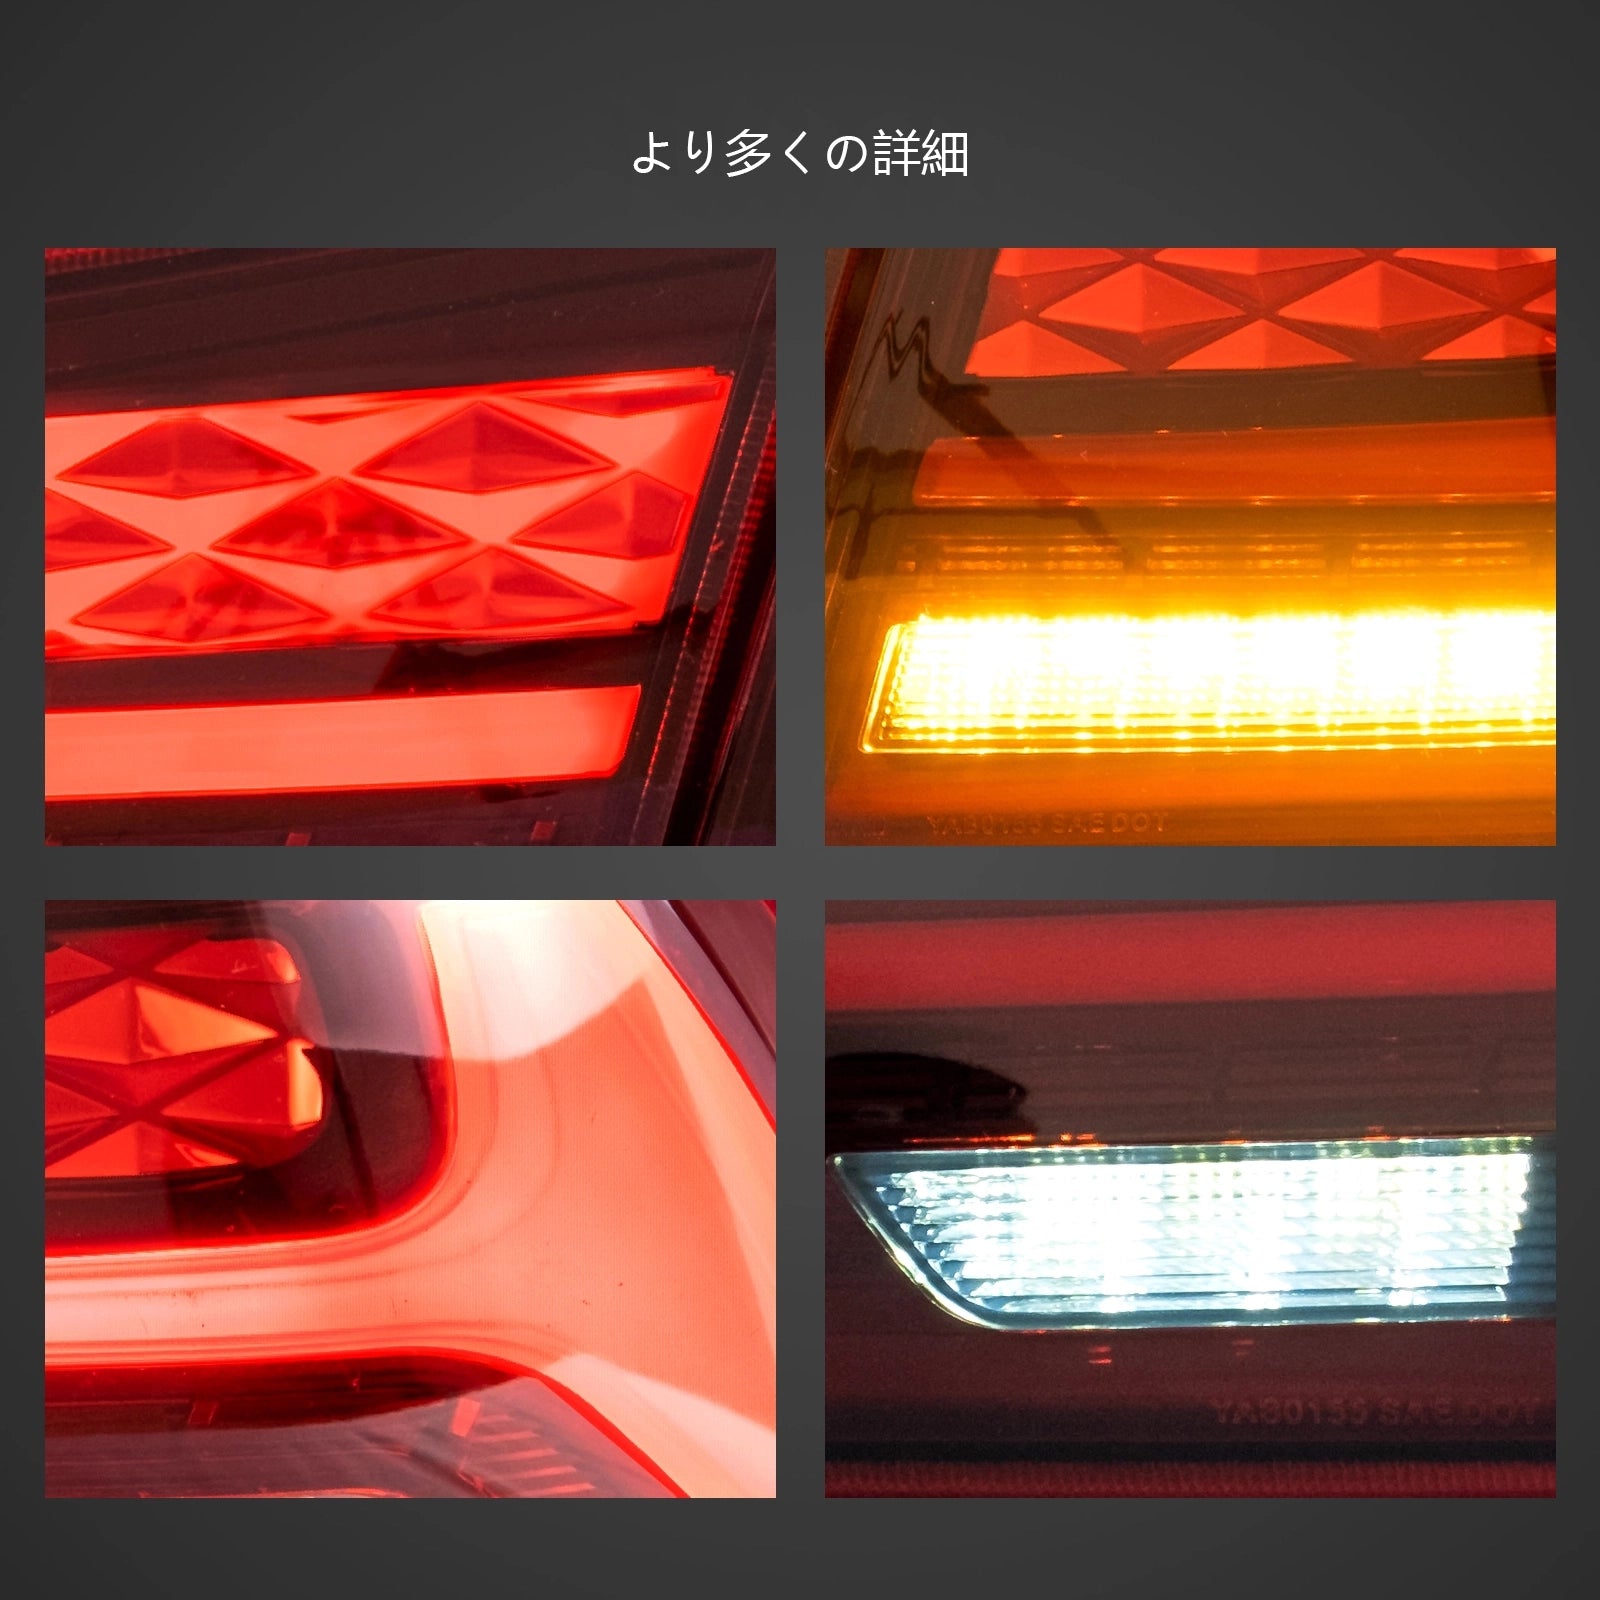 08-17 Mitsubishi Lancer & EVO X ダイナミック ウェルカム ライティング付き Vland IV LED テールライト